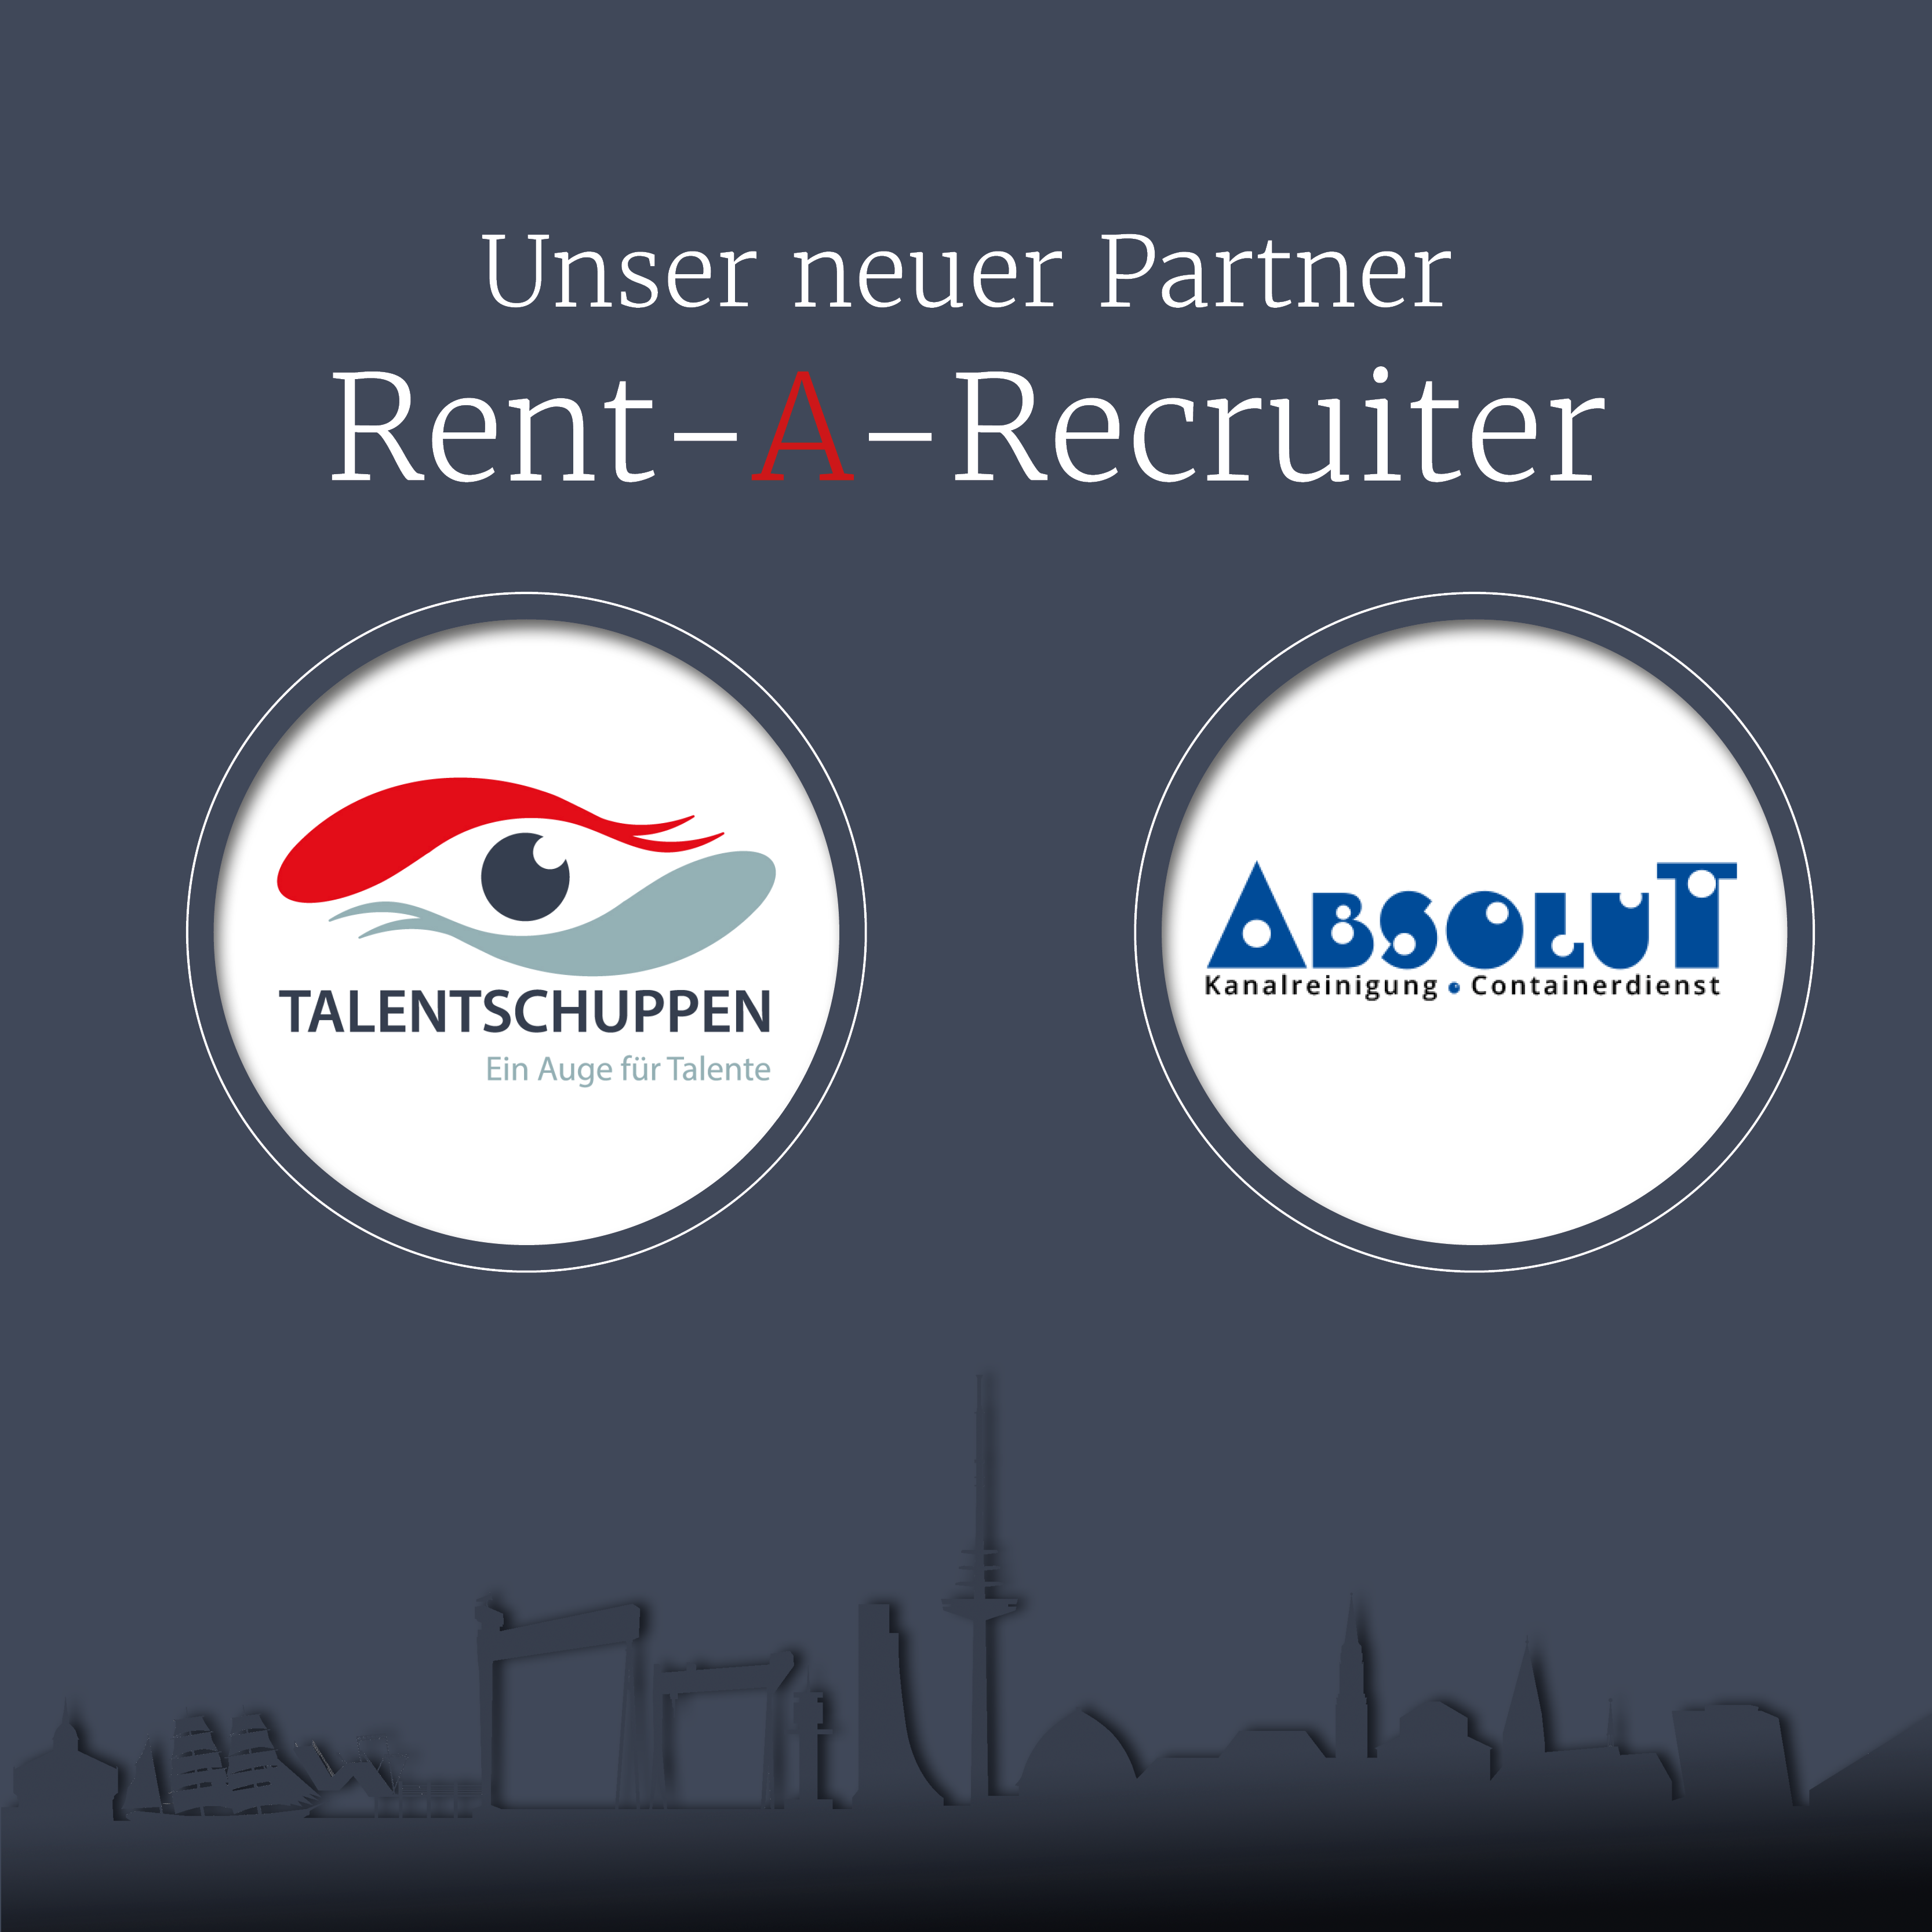 You are currently viewing Absolut – Kanalreinigung + Containerdienst – Rent-A-Recruiter